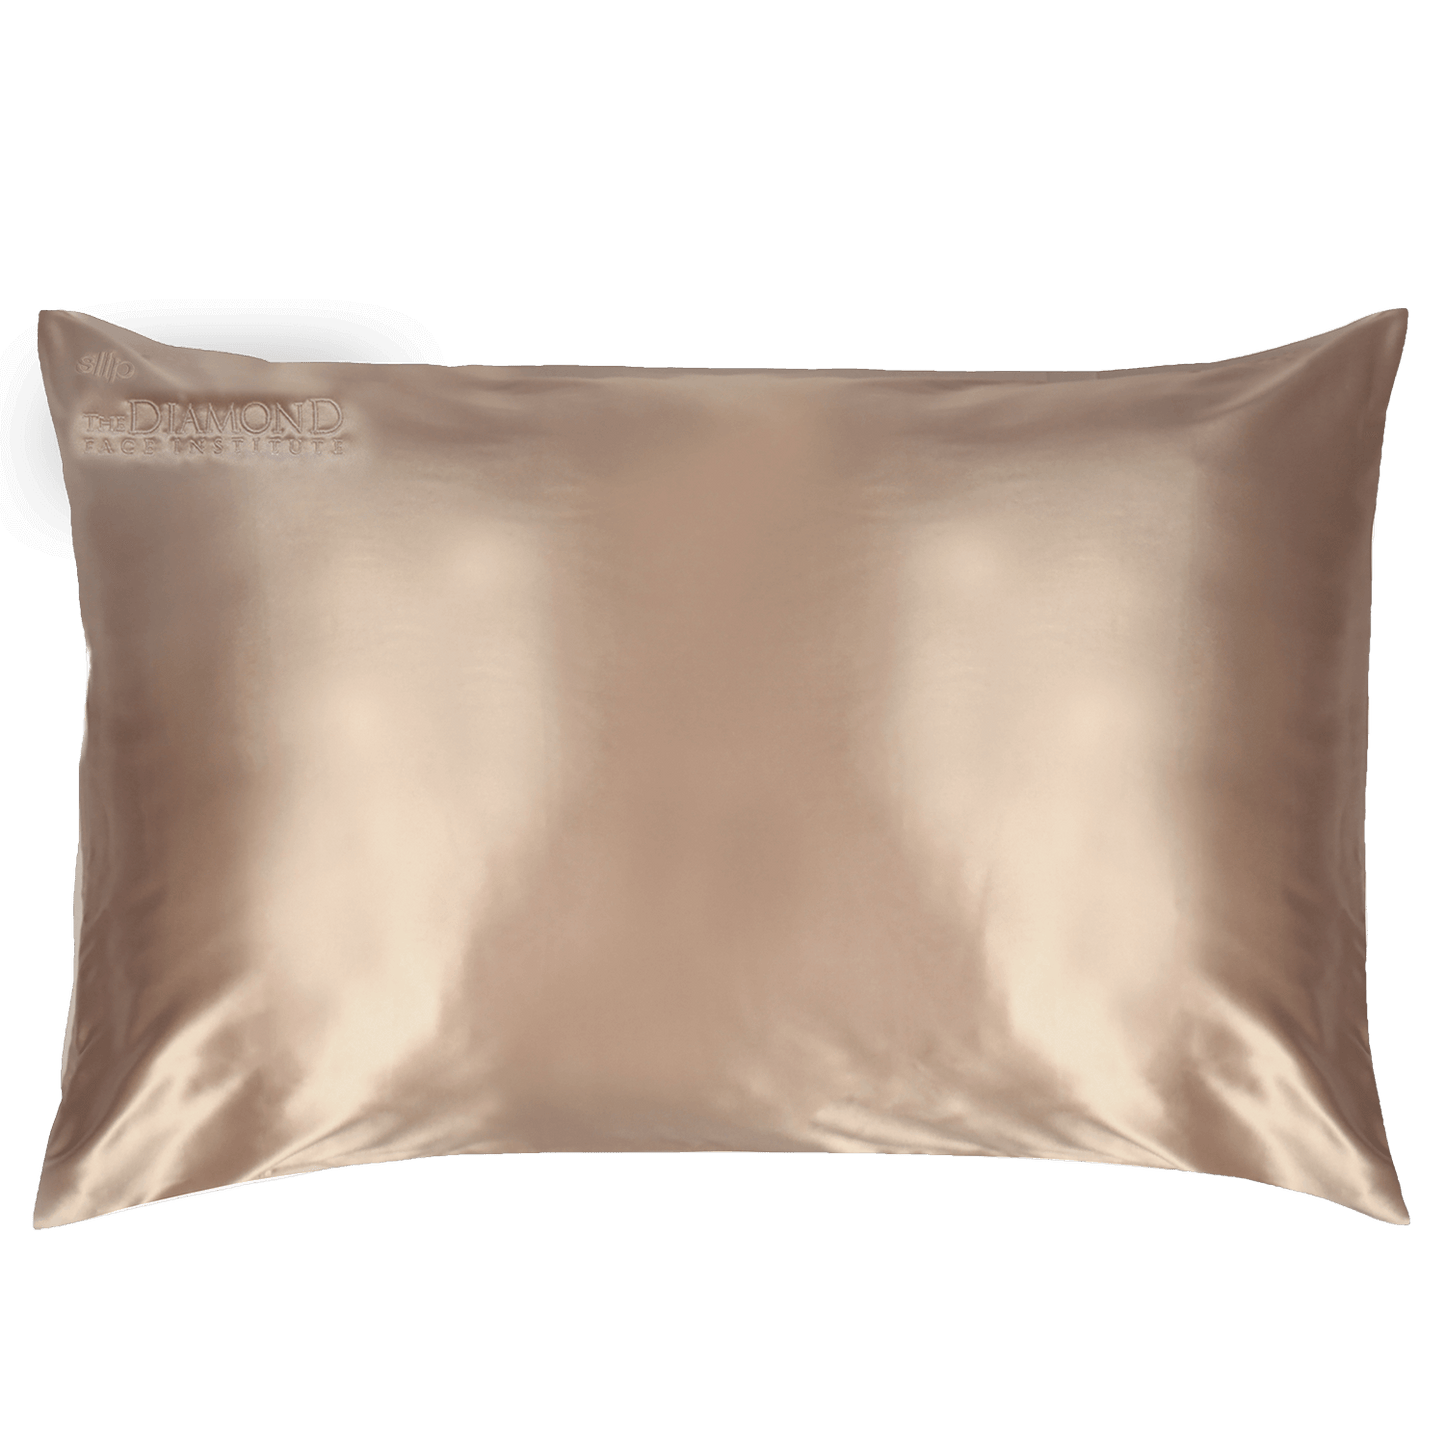 Monogrammed Pillowcase in caramel